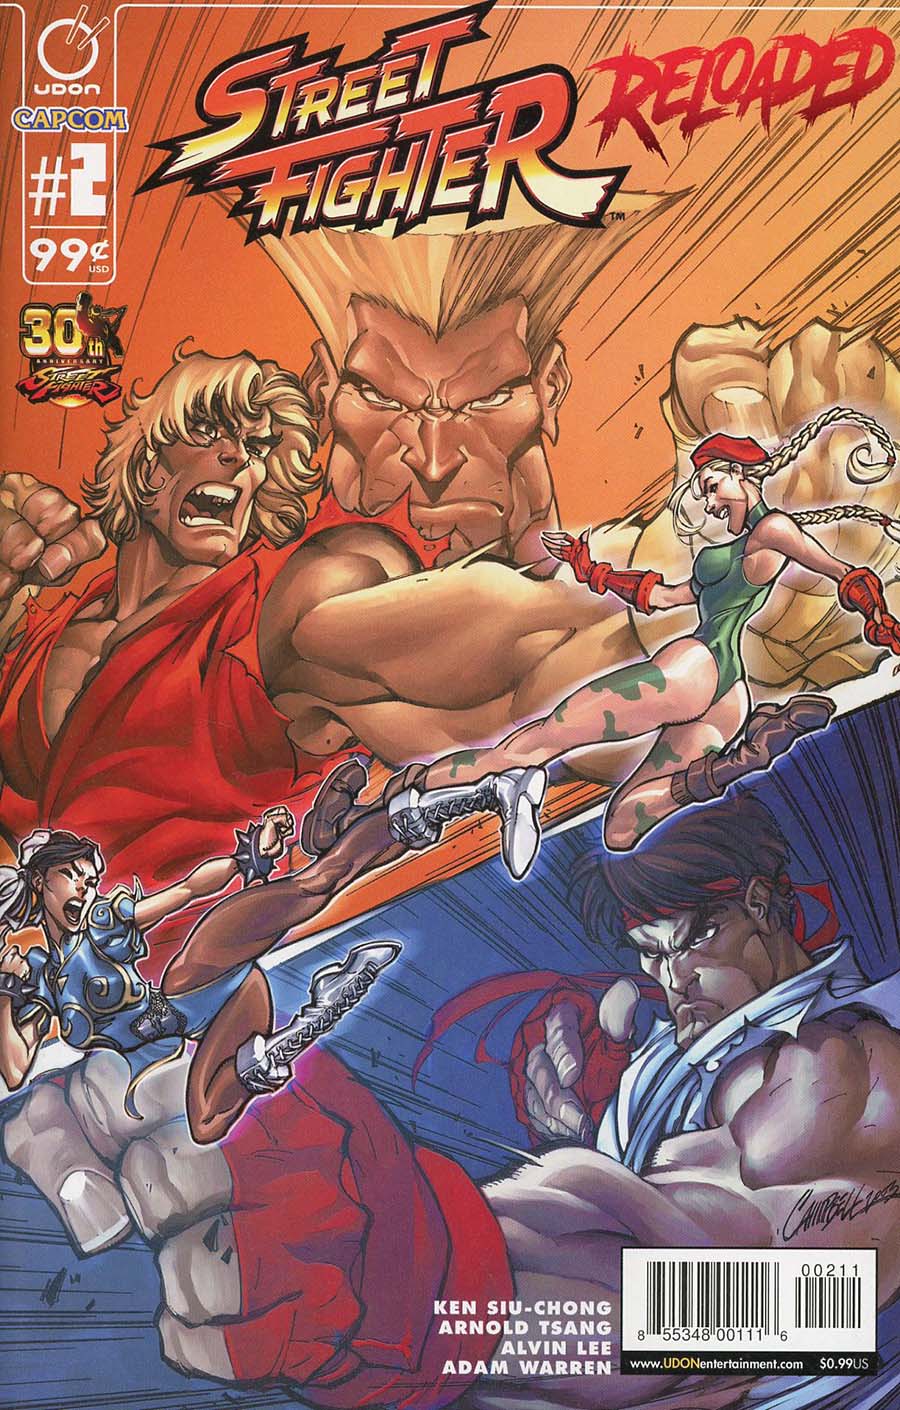 Street Fighter Reloaded #2